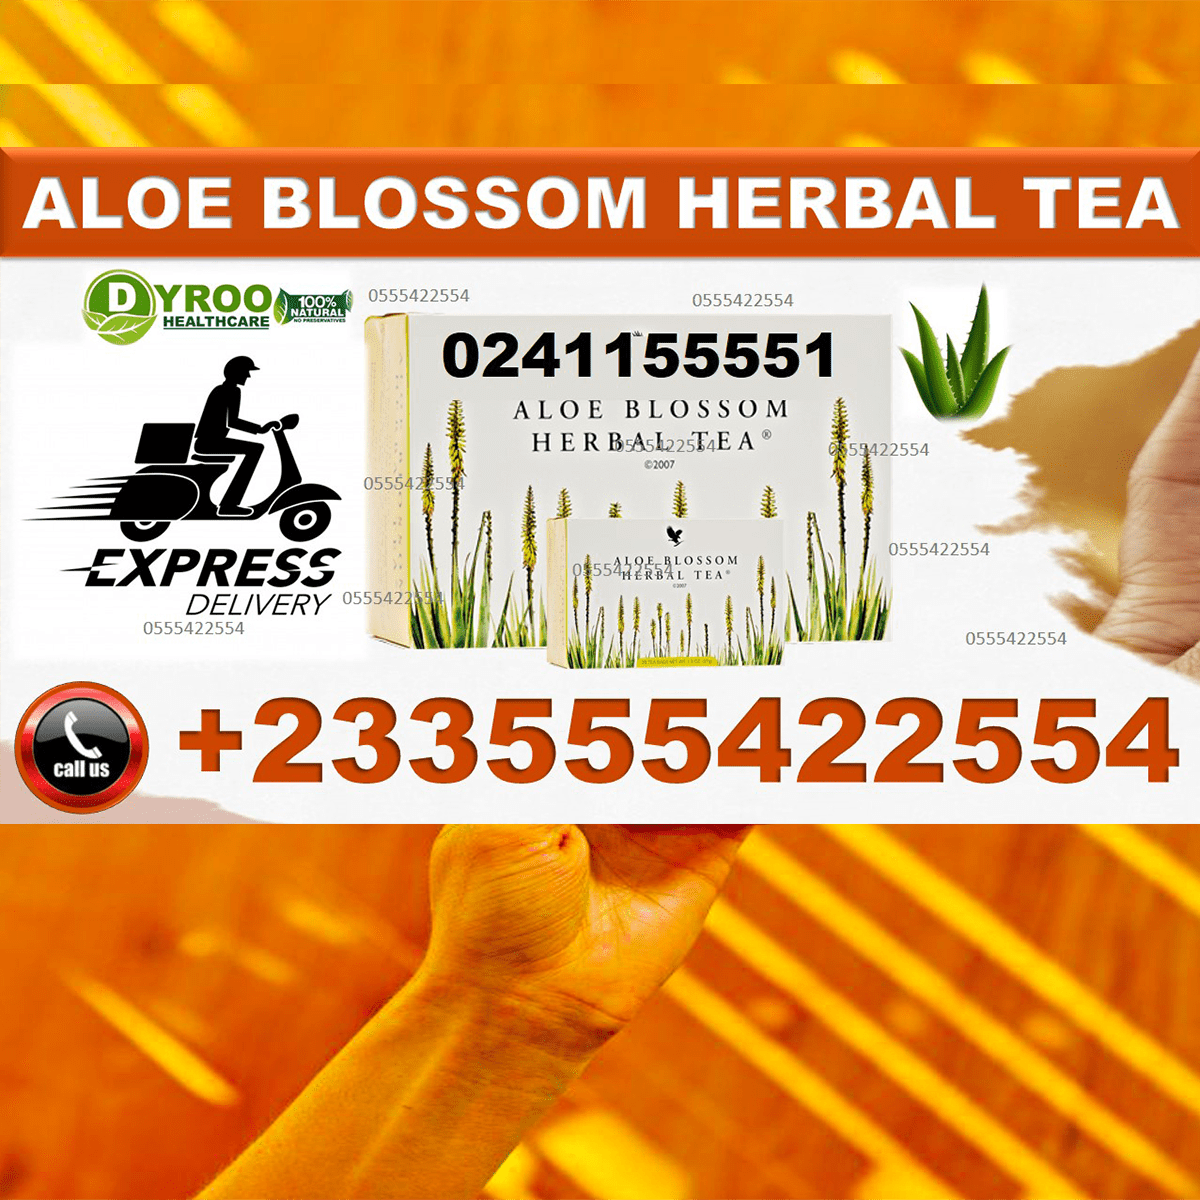 Aloe Blossom Herbal Tea in Ghana